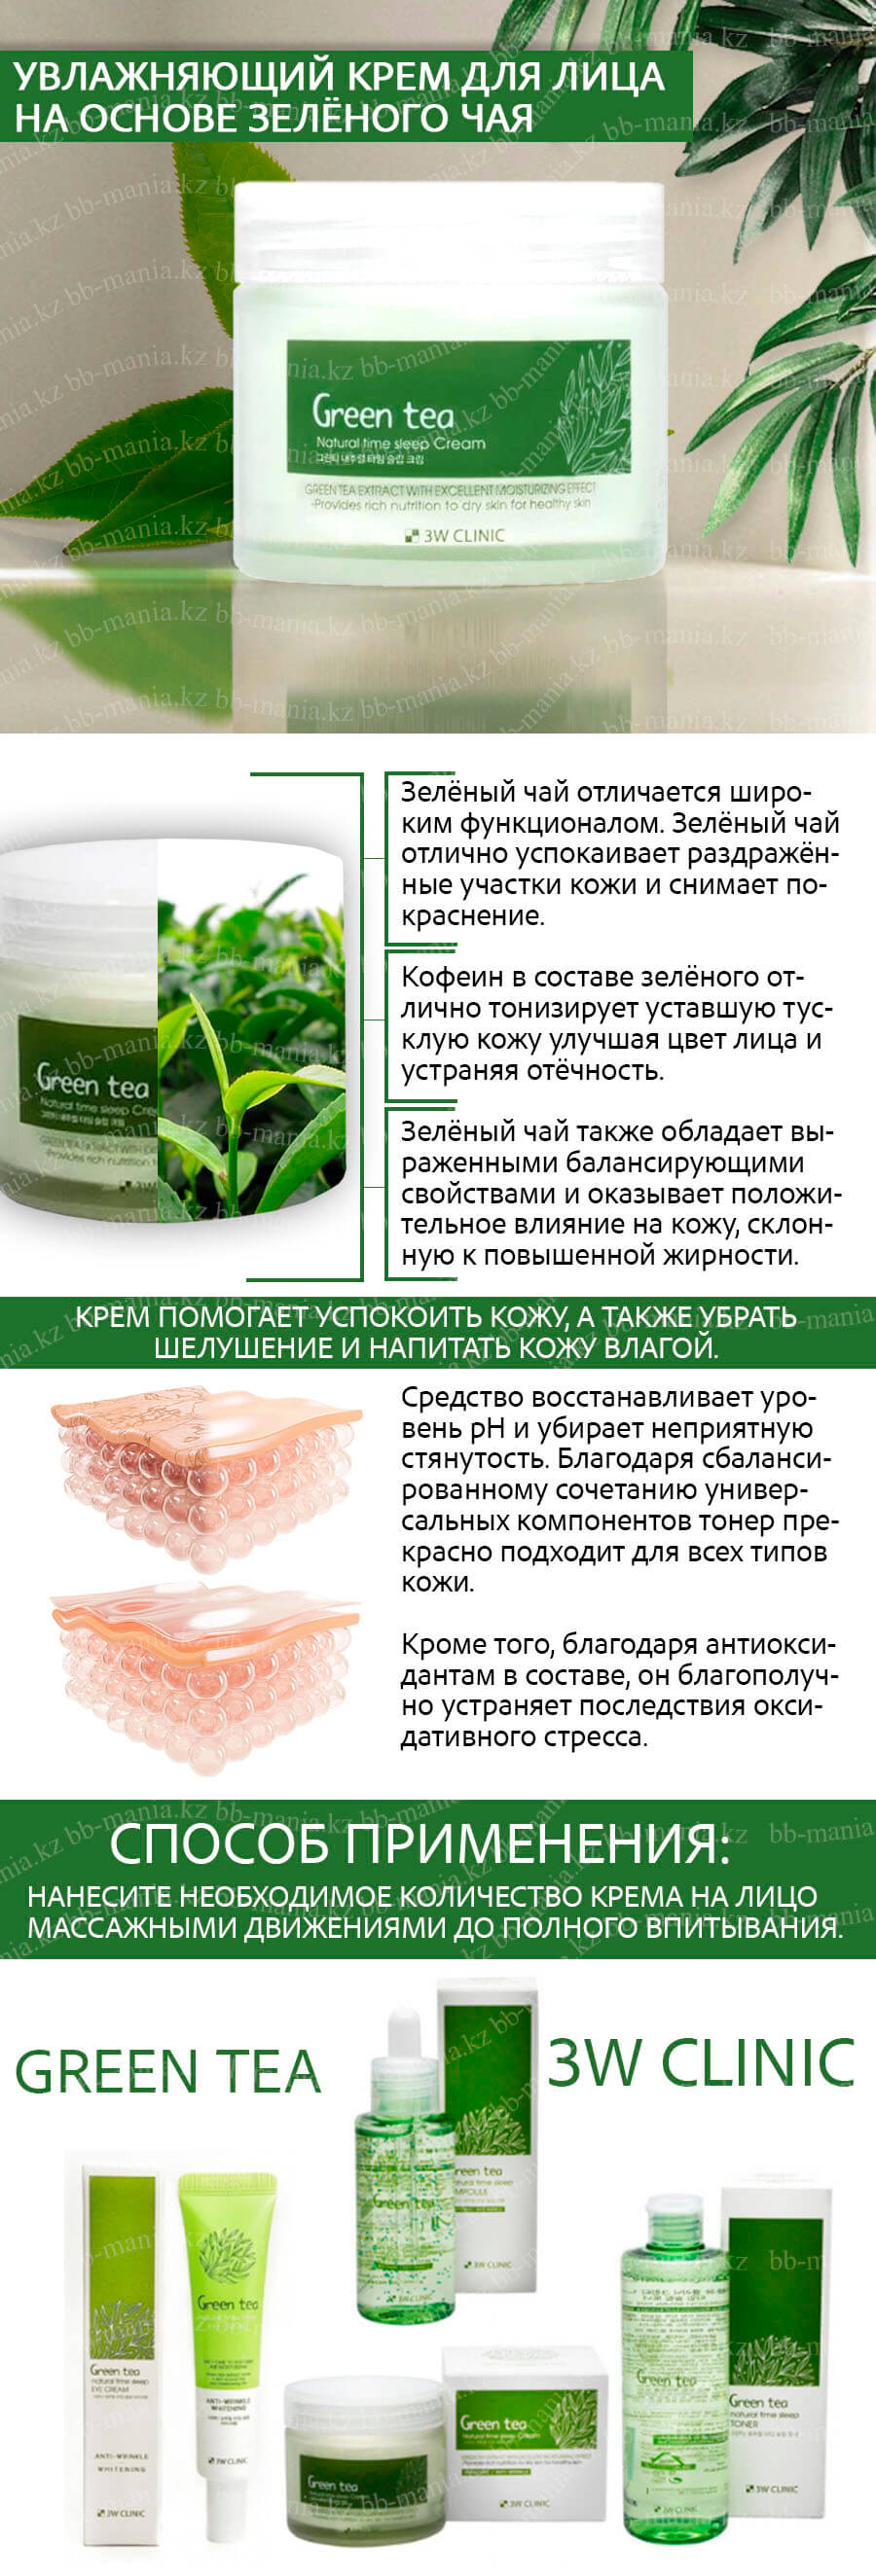 green_tea_natural_time_sleep_cream_3w_clinic